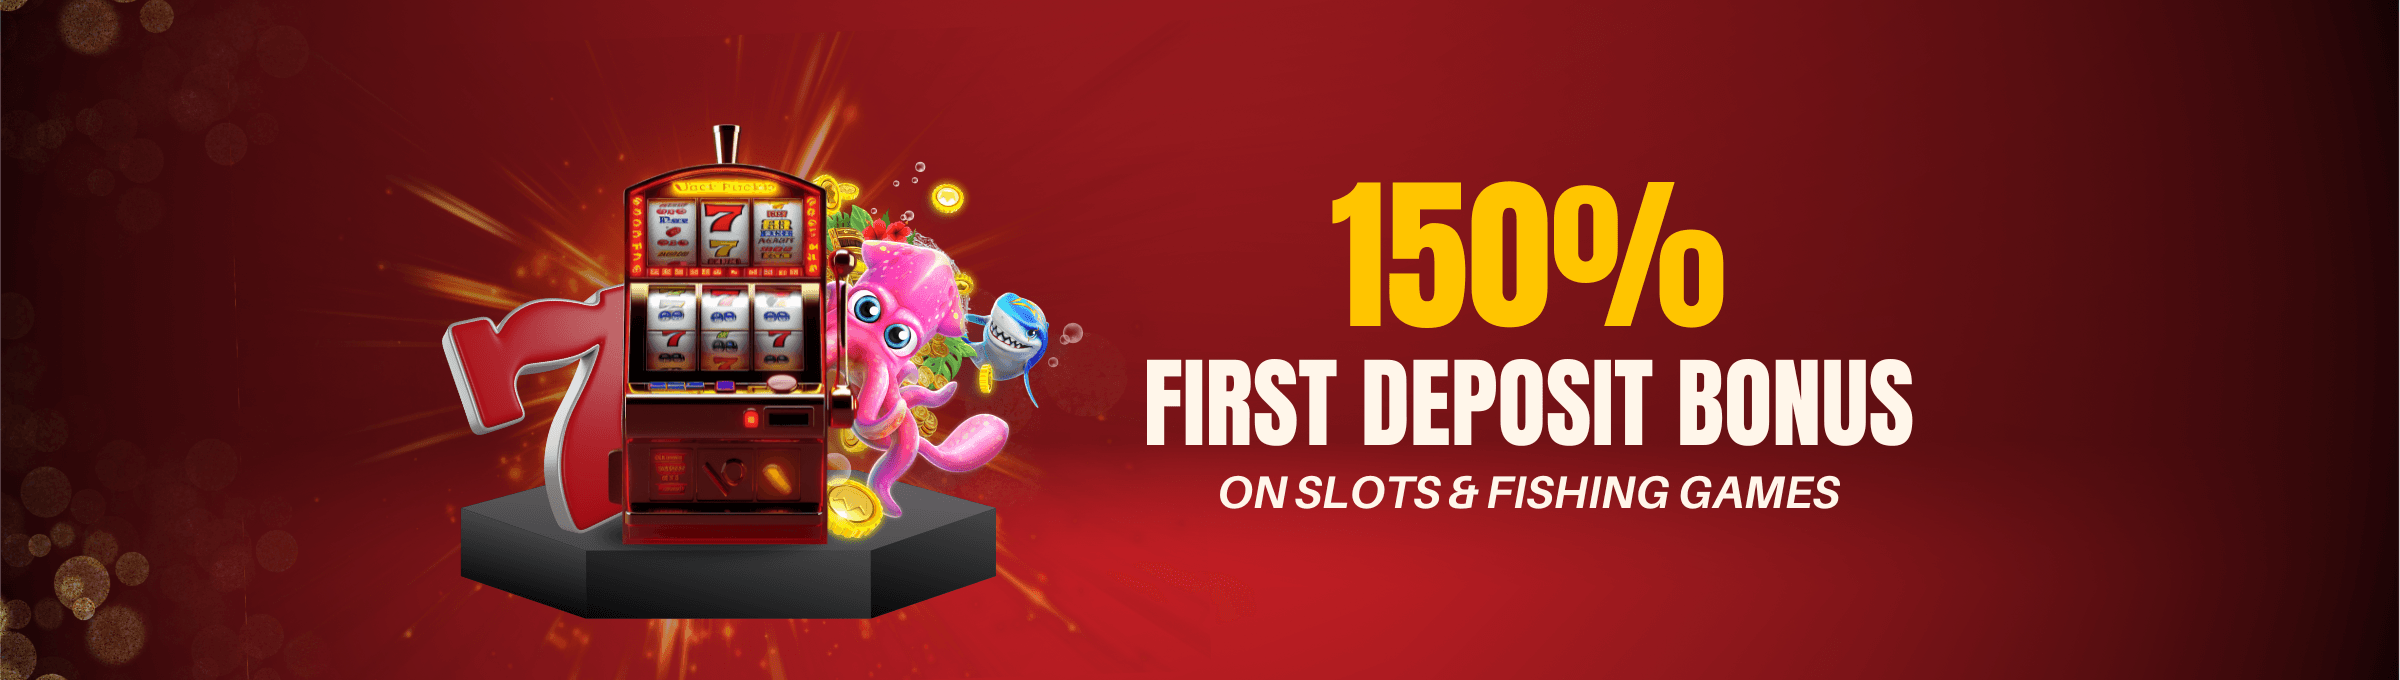 150% Deposit Bonus on Slot and Fishing